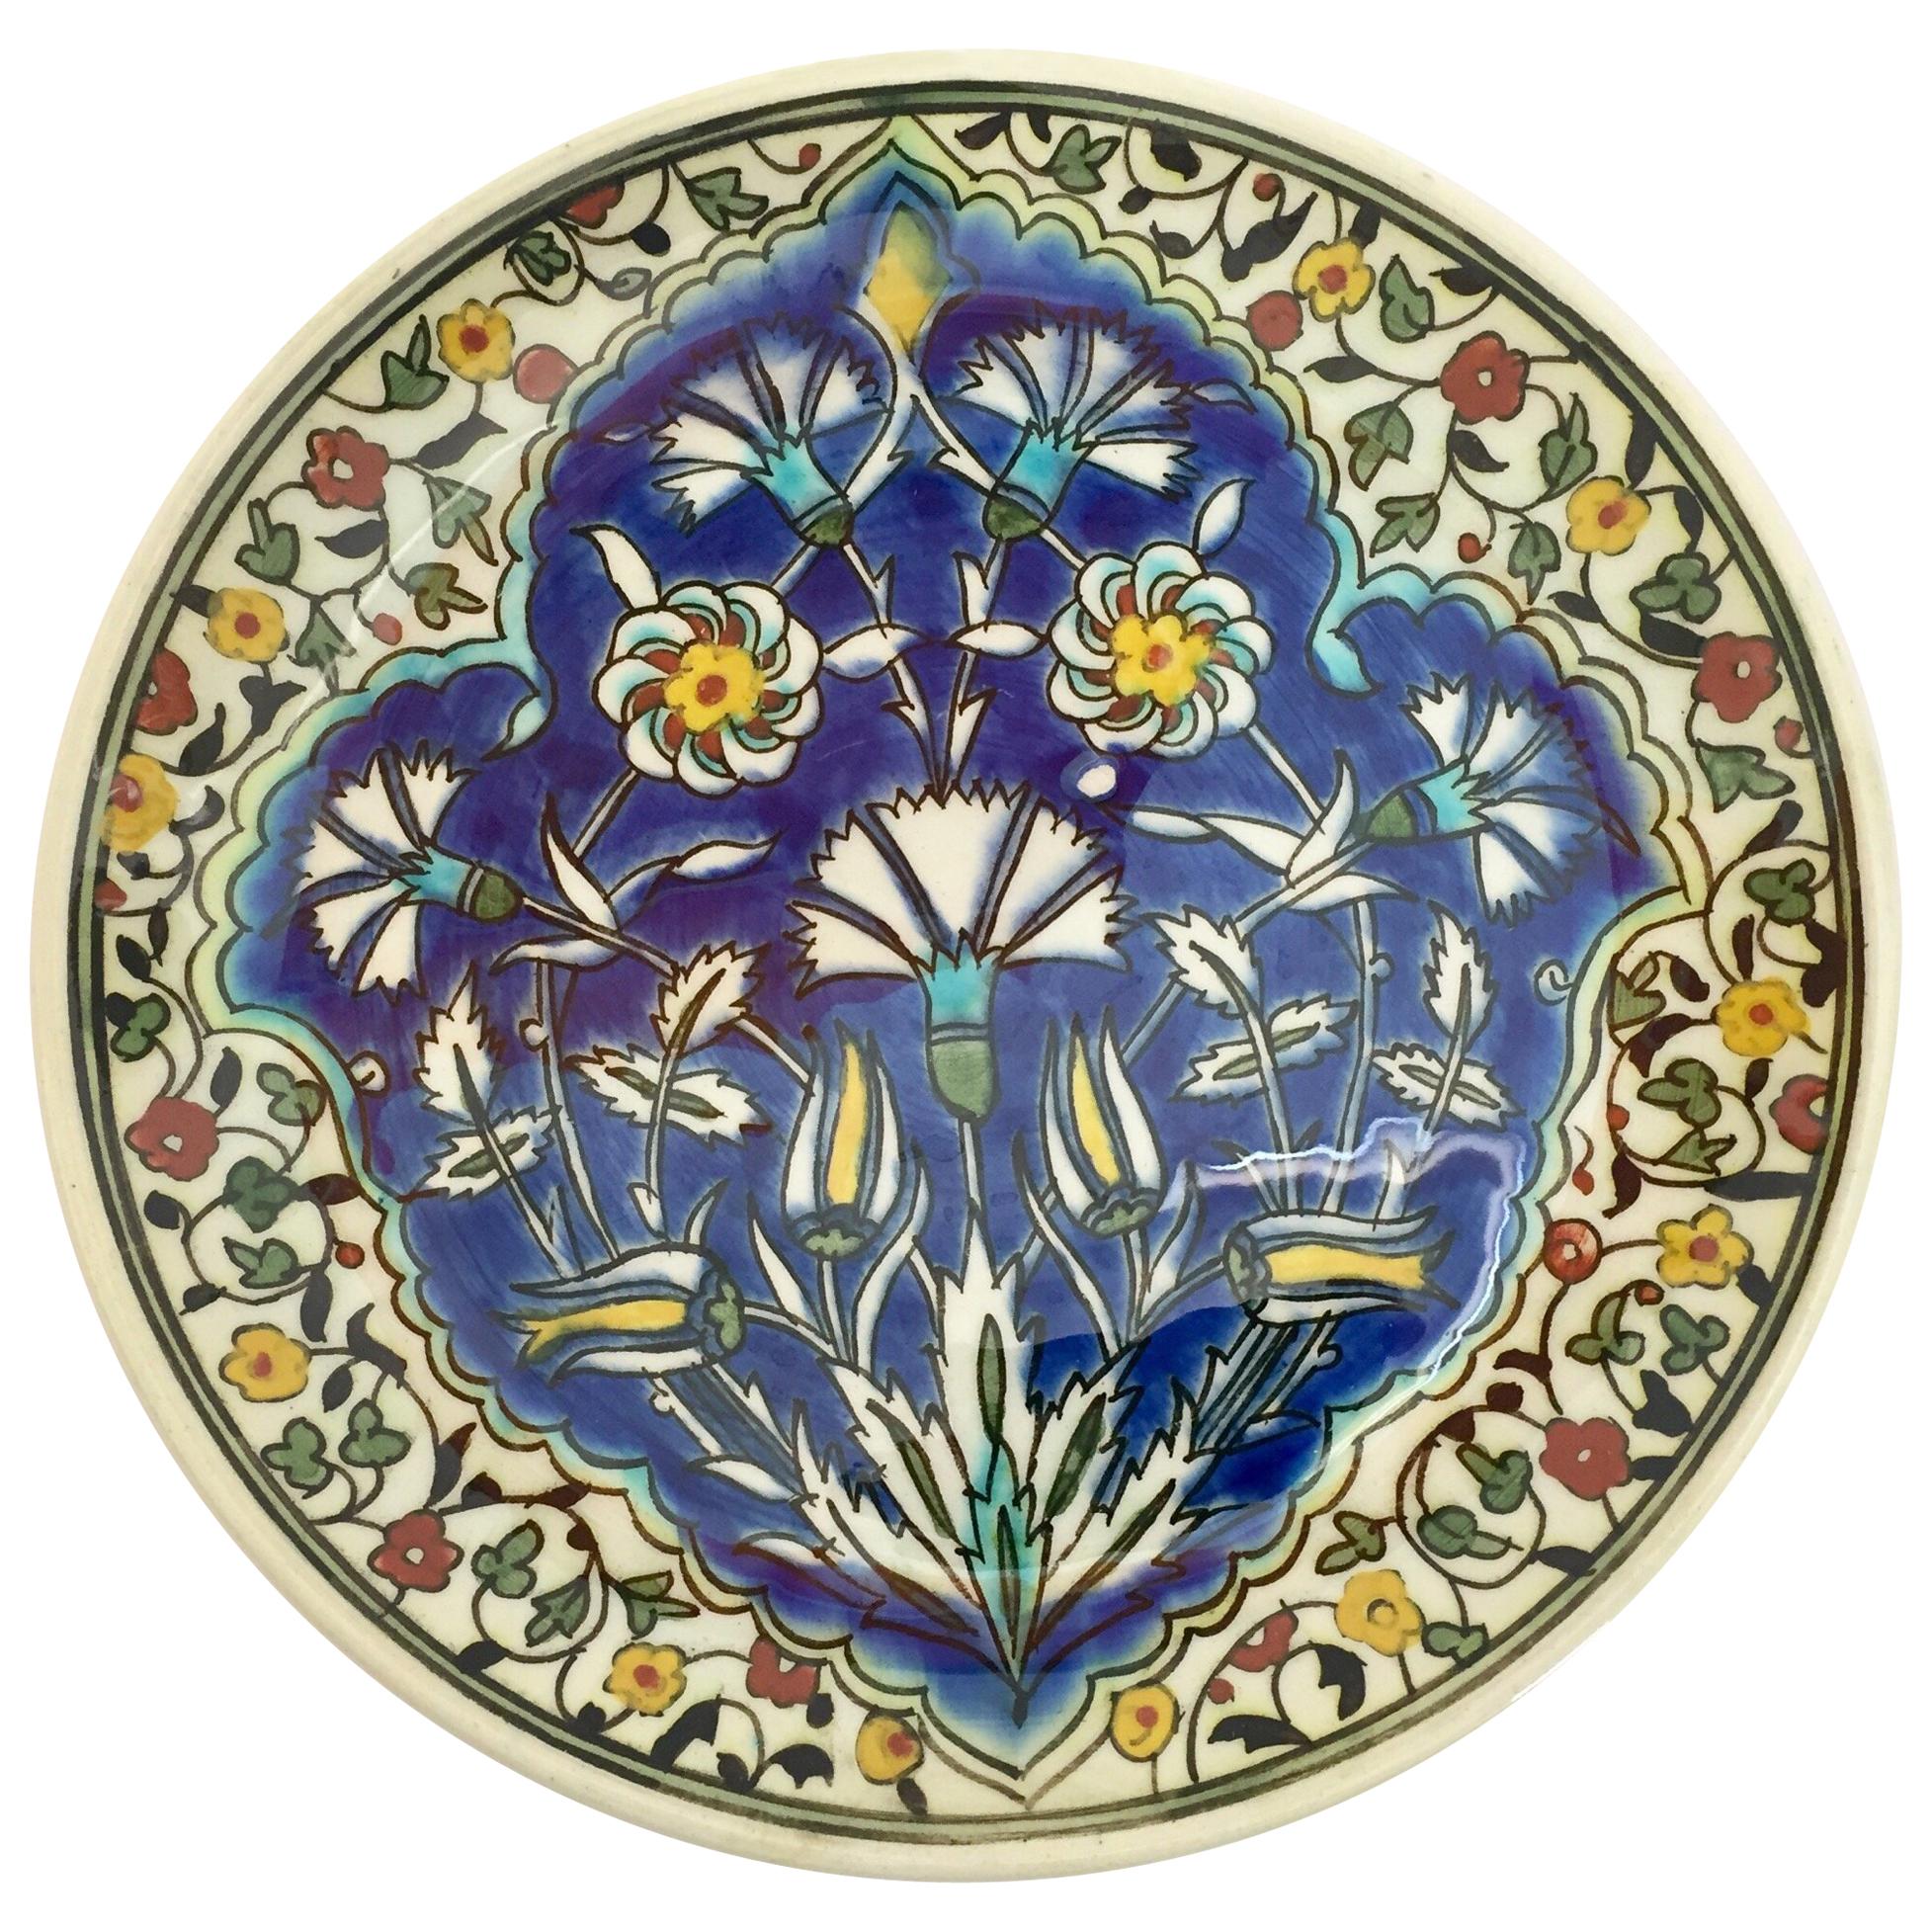 Polychrome Hand Painted Ceramic Decorative Plate with Moorish Floral Design